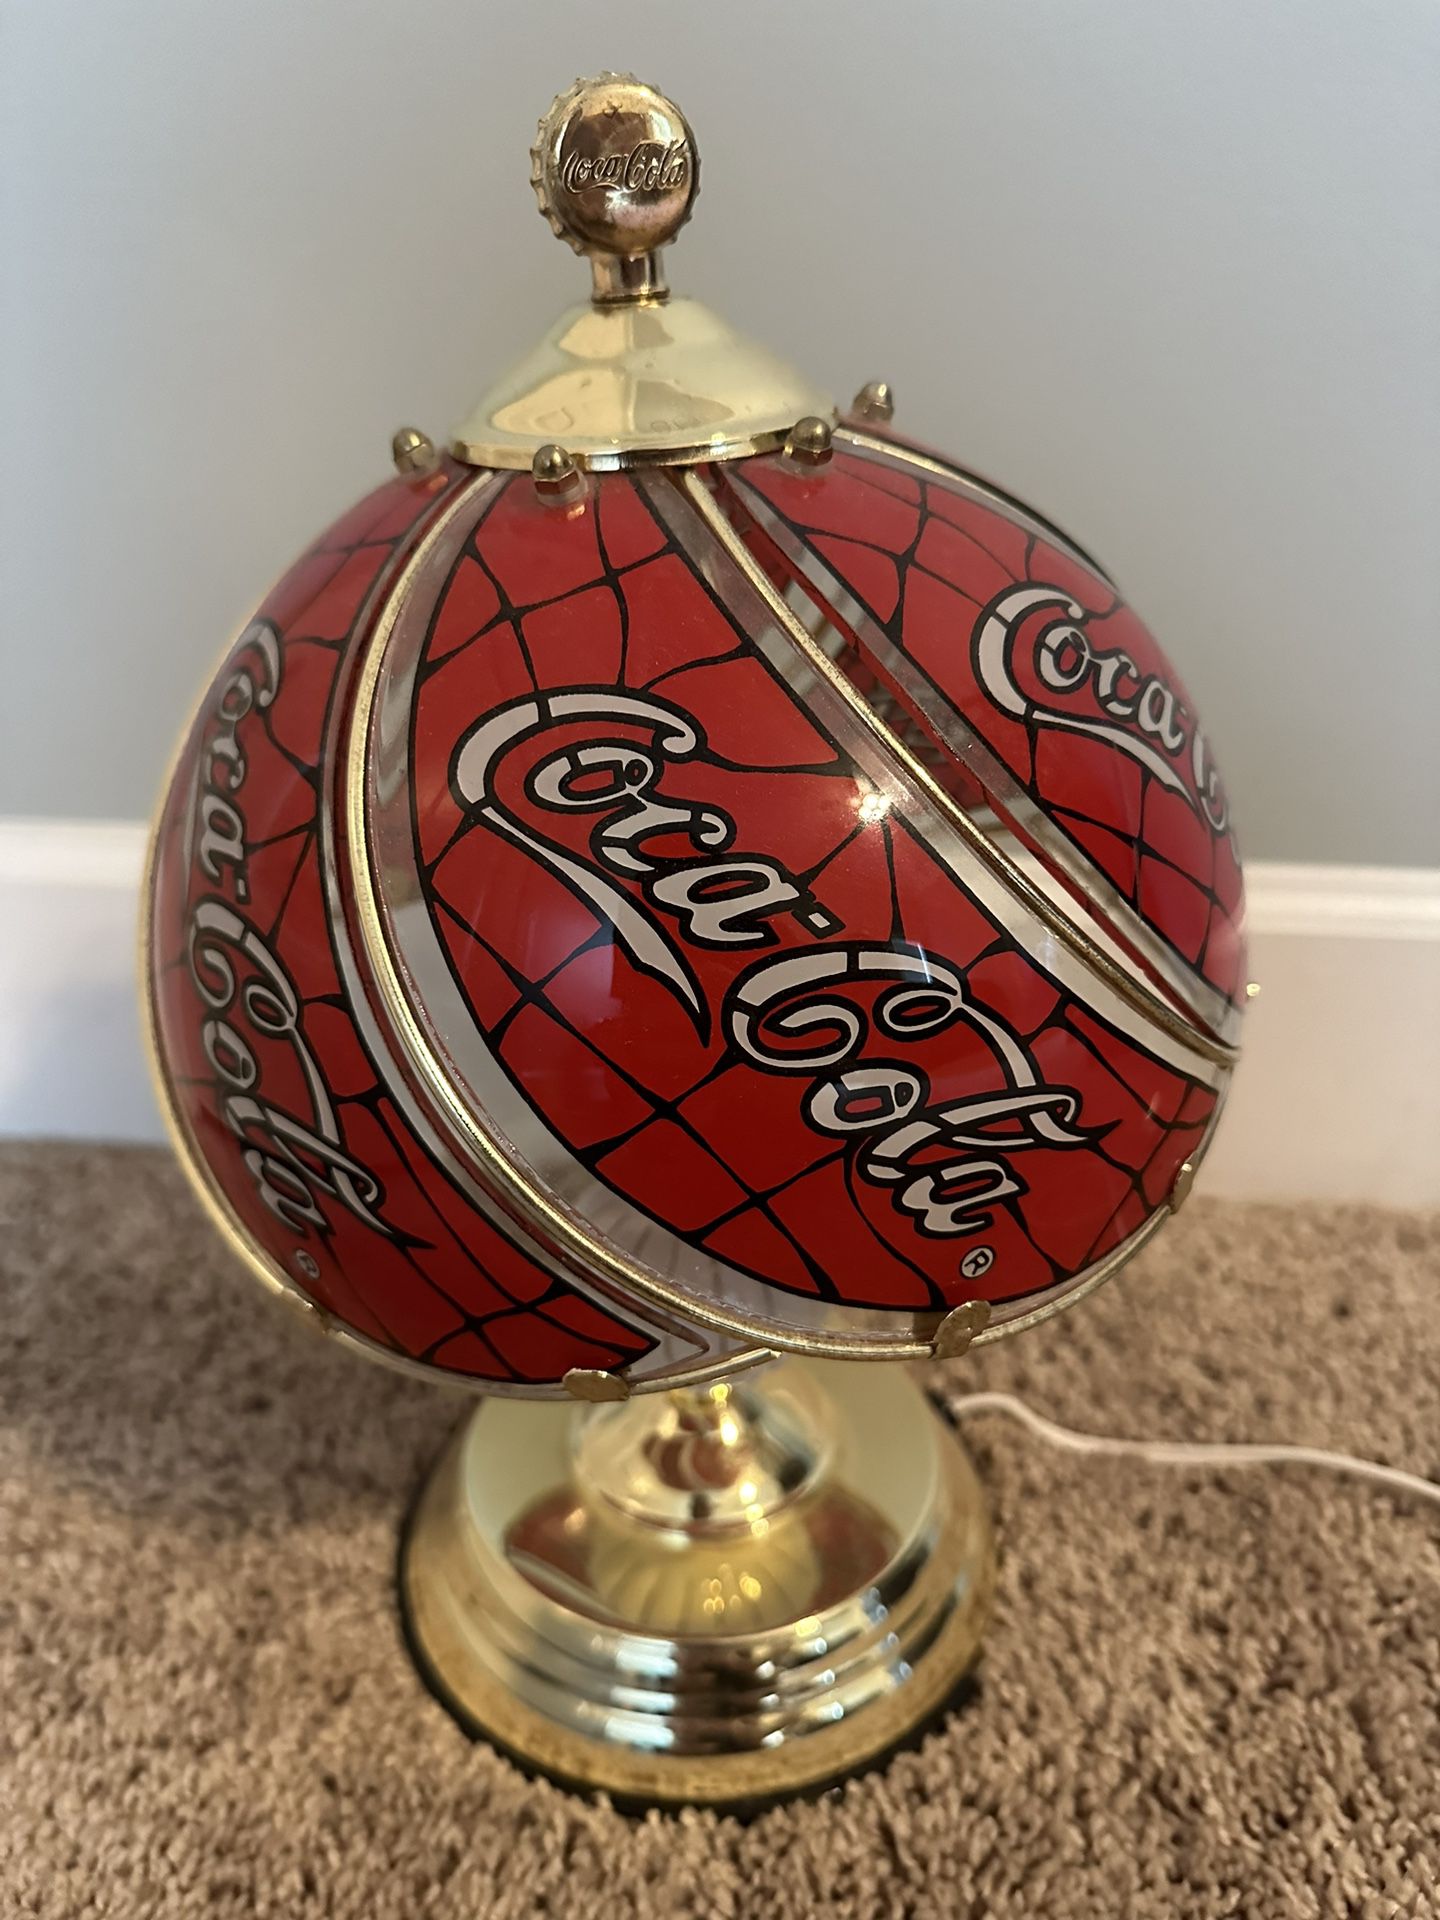 Authentic Coca-Cola Touch Lamp, Vintage Tiffany Style (Pub / Desk Lamp)